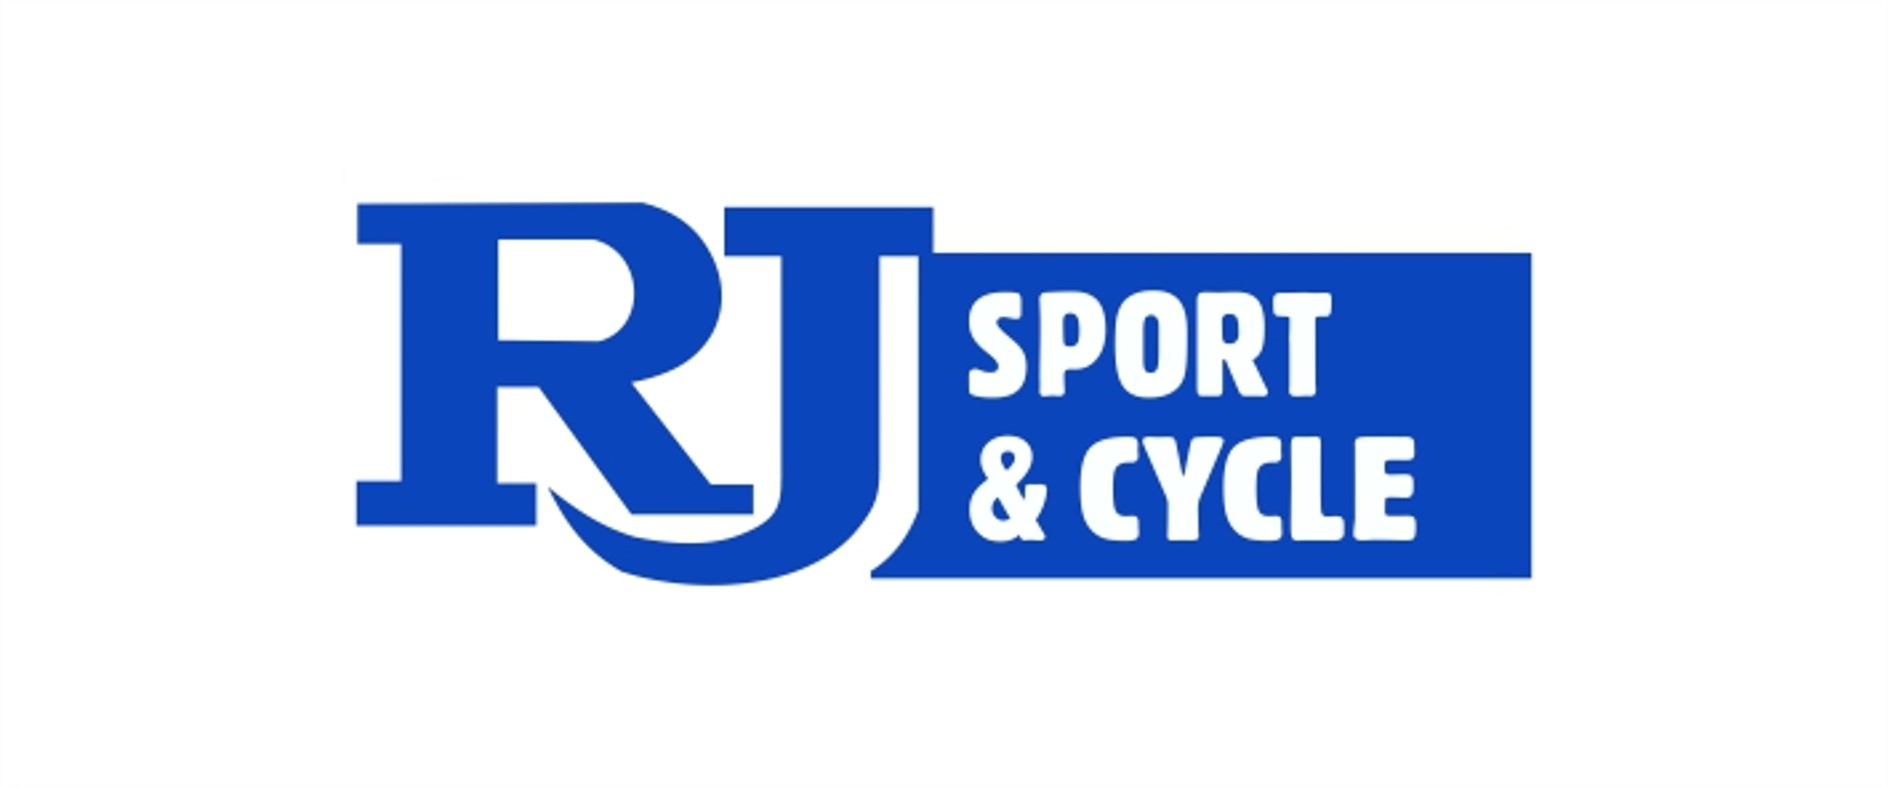 RJ Sport & Cycle